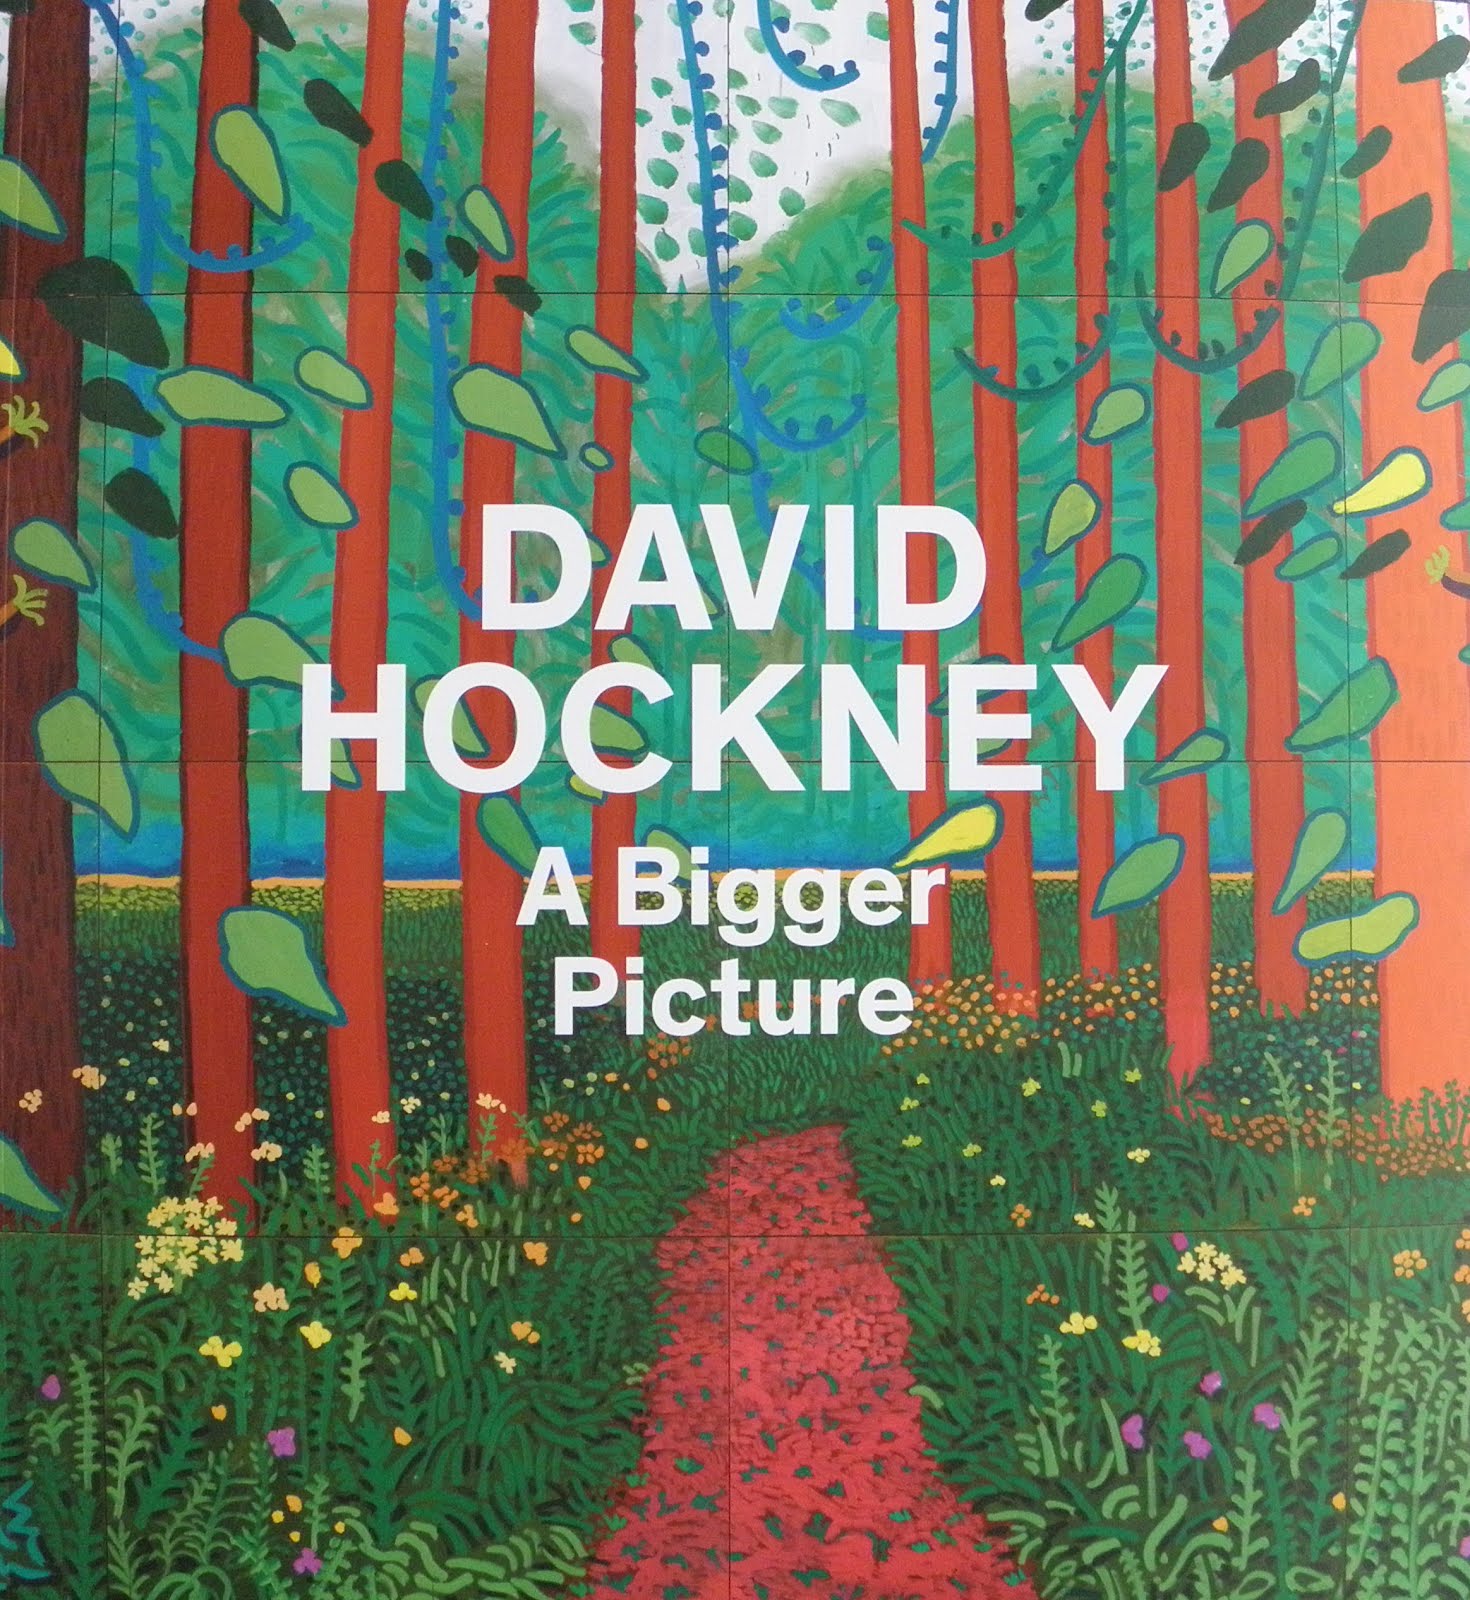 Art By David Hockney Modern Design By Moderndesign Org